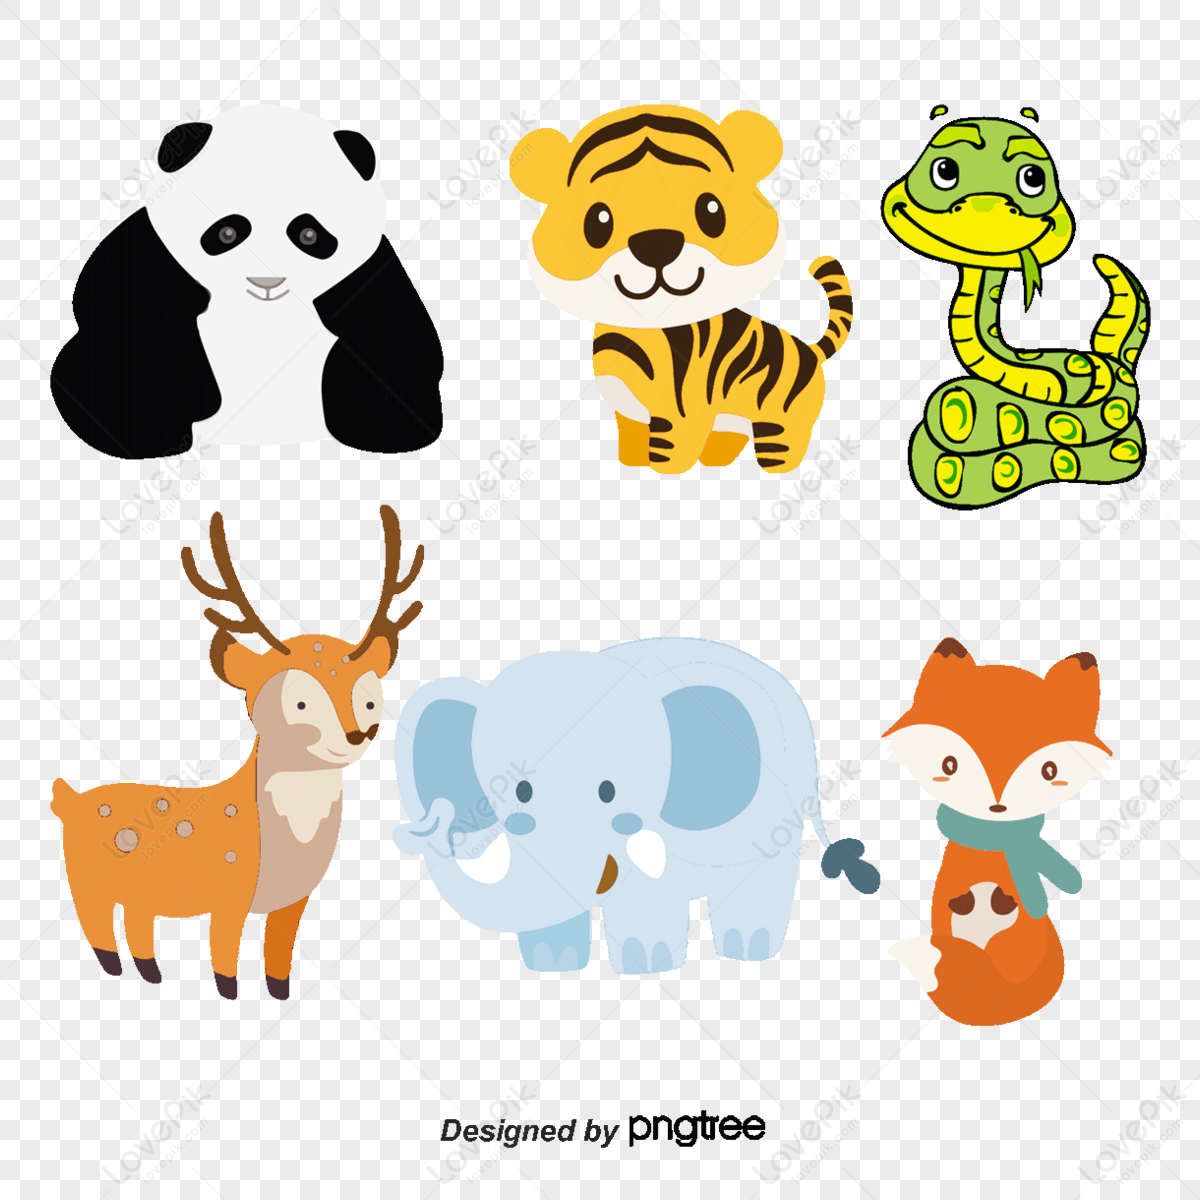 vector animals,squirrel,tiger,snake png transparent background